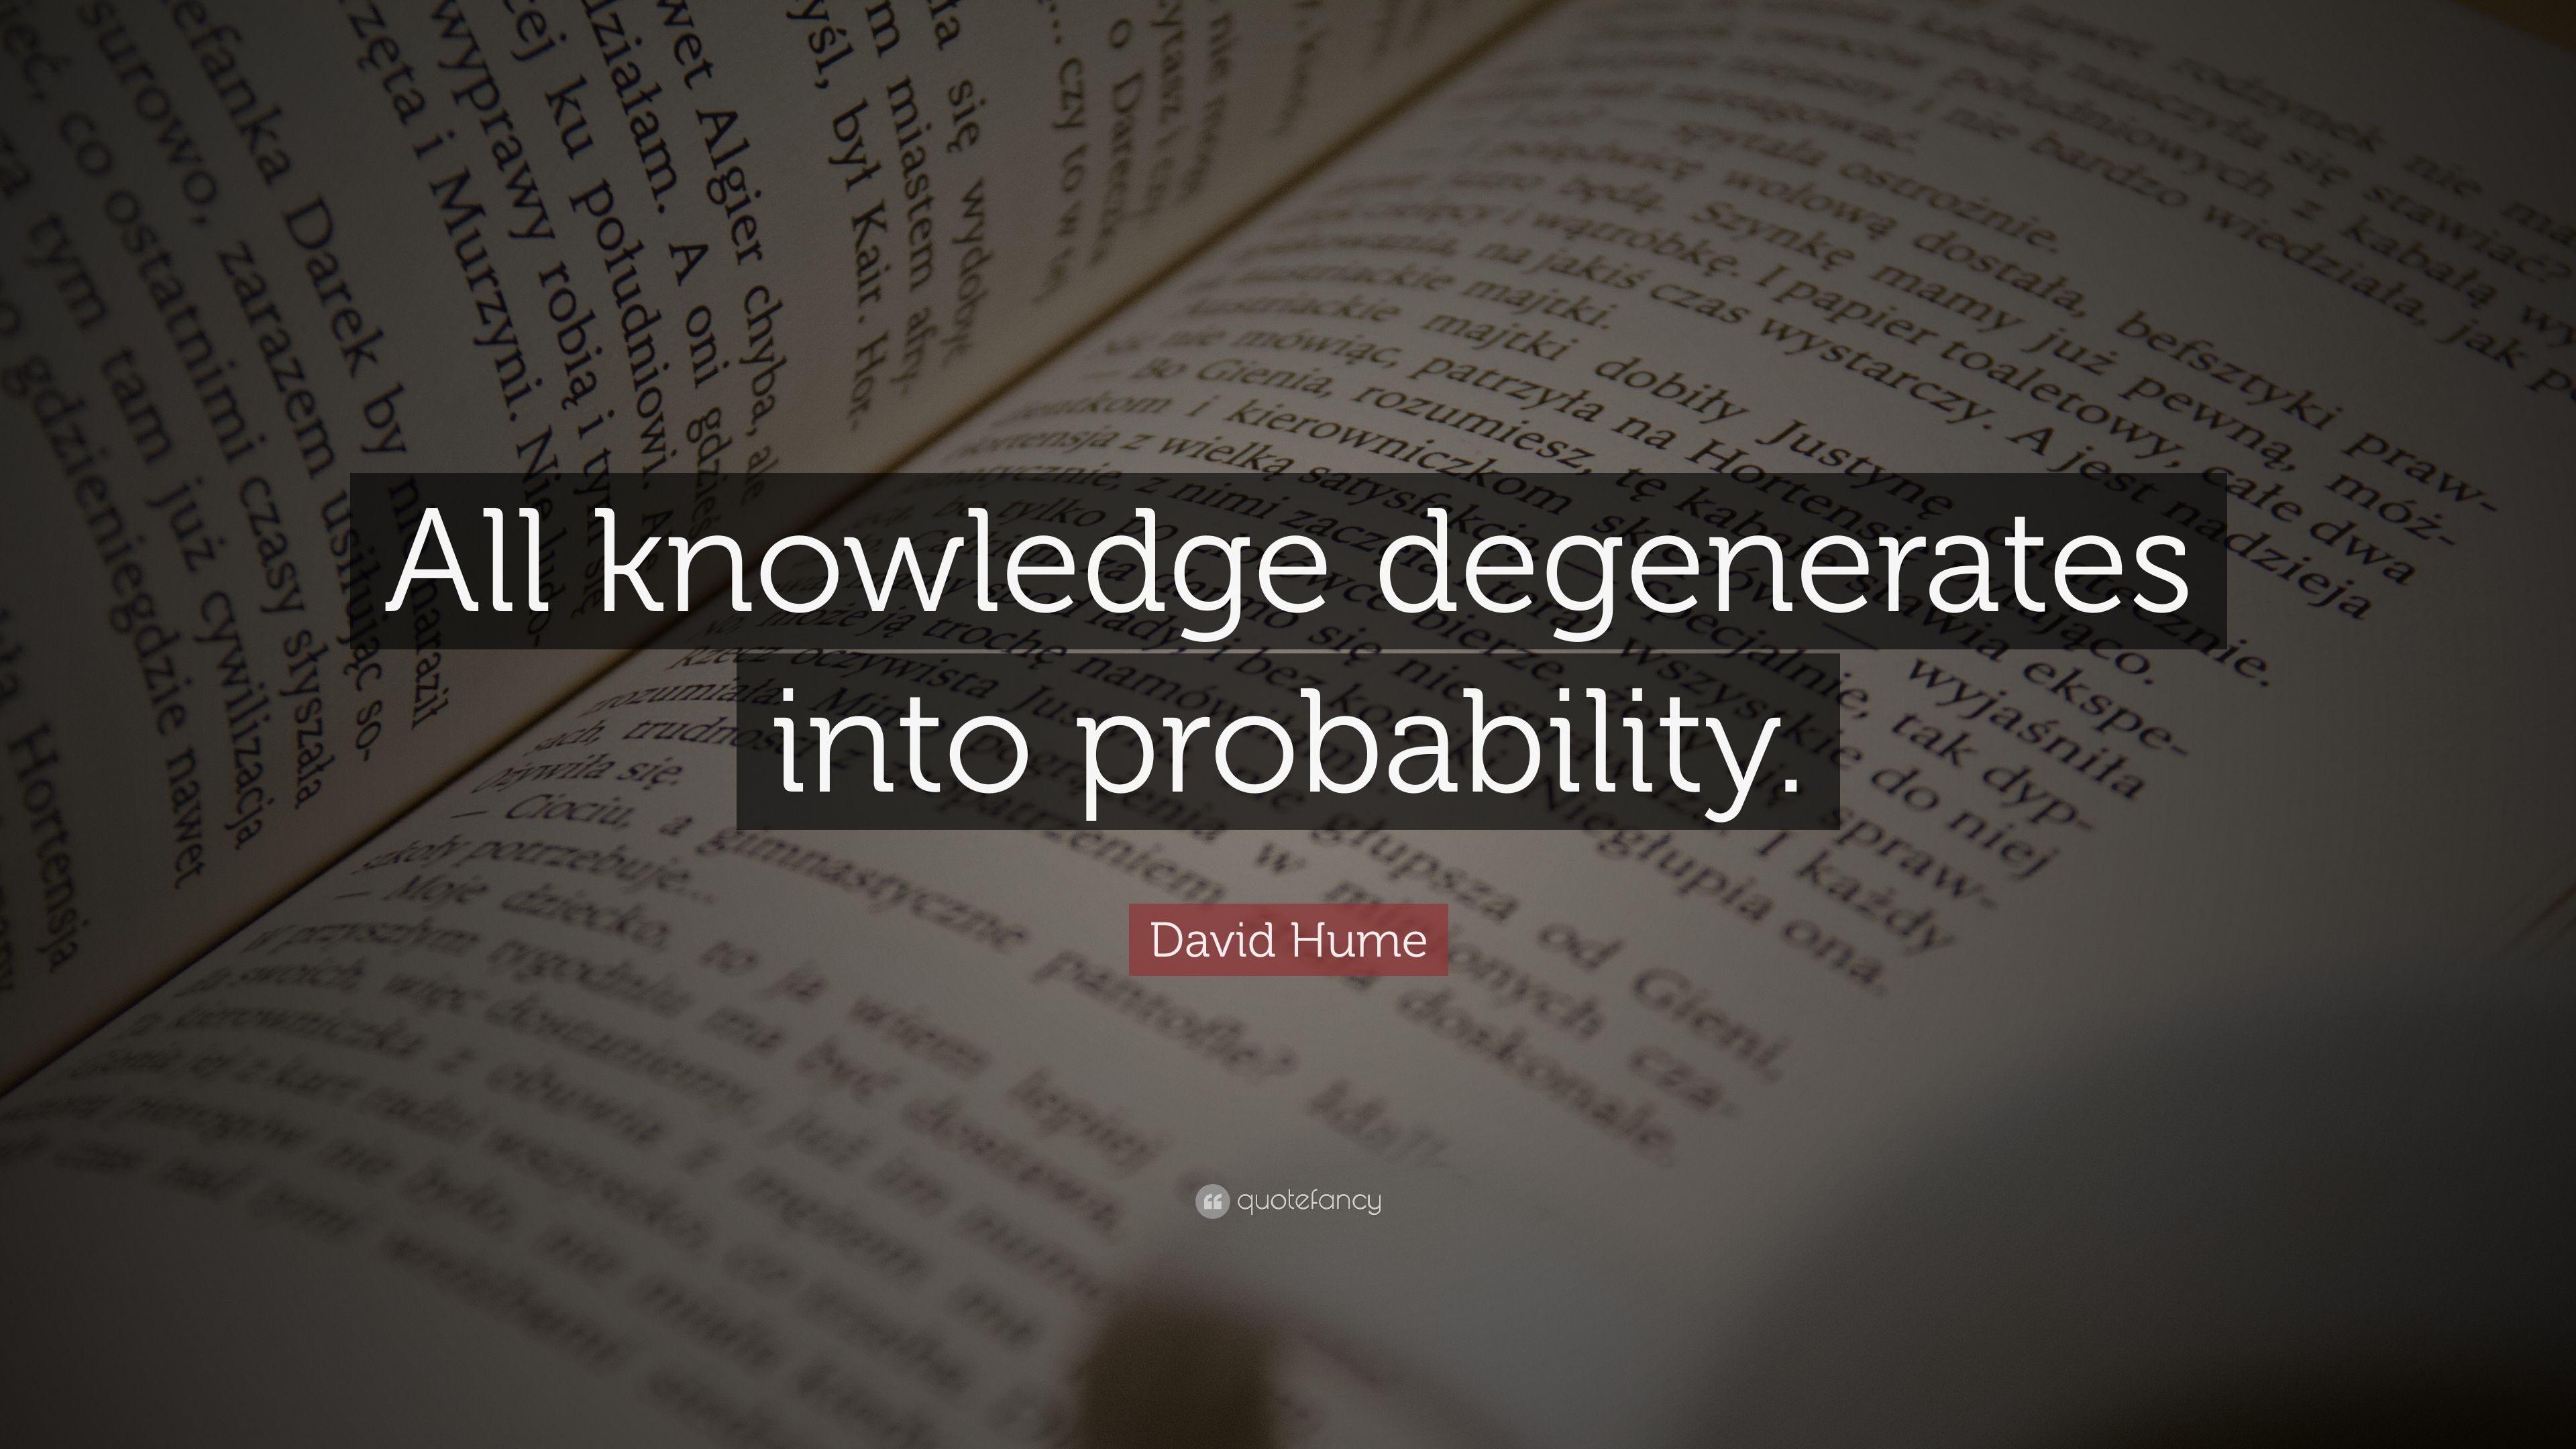 David Hume Quote: “All knowledge degenerates into probability.” (9 wallpaper)